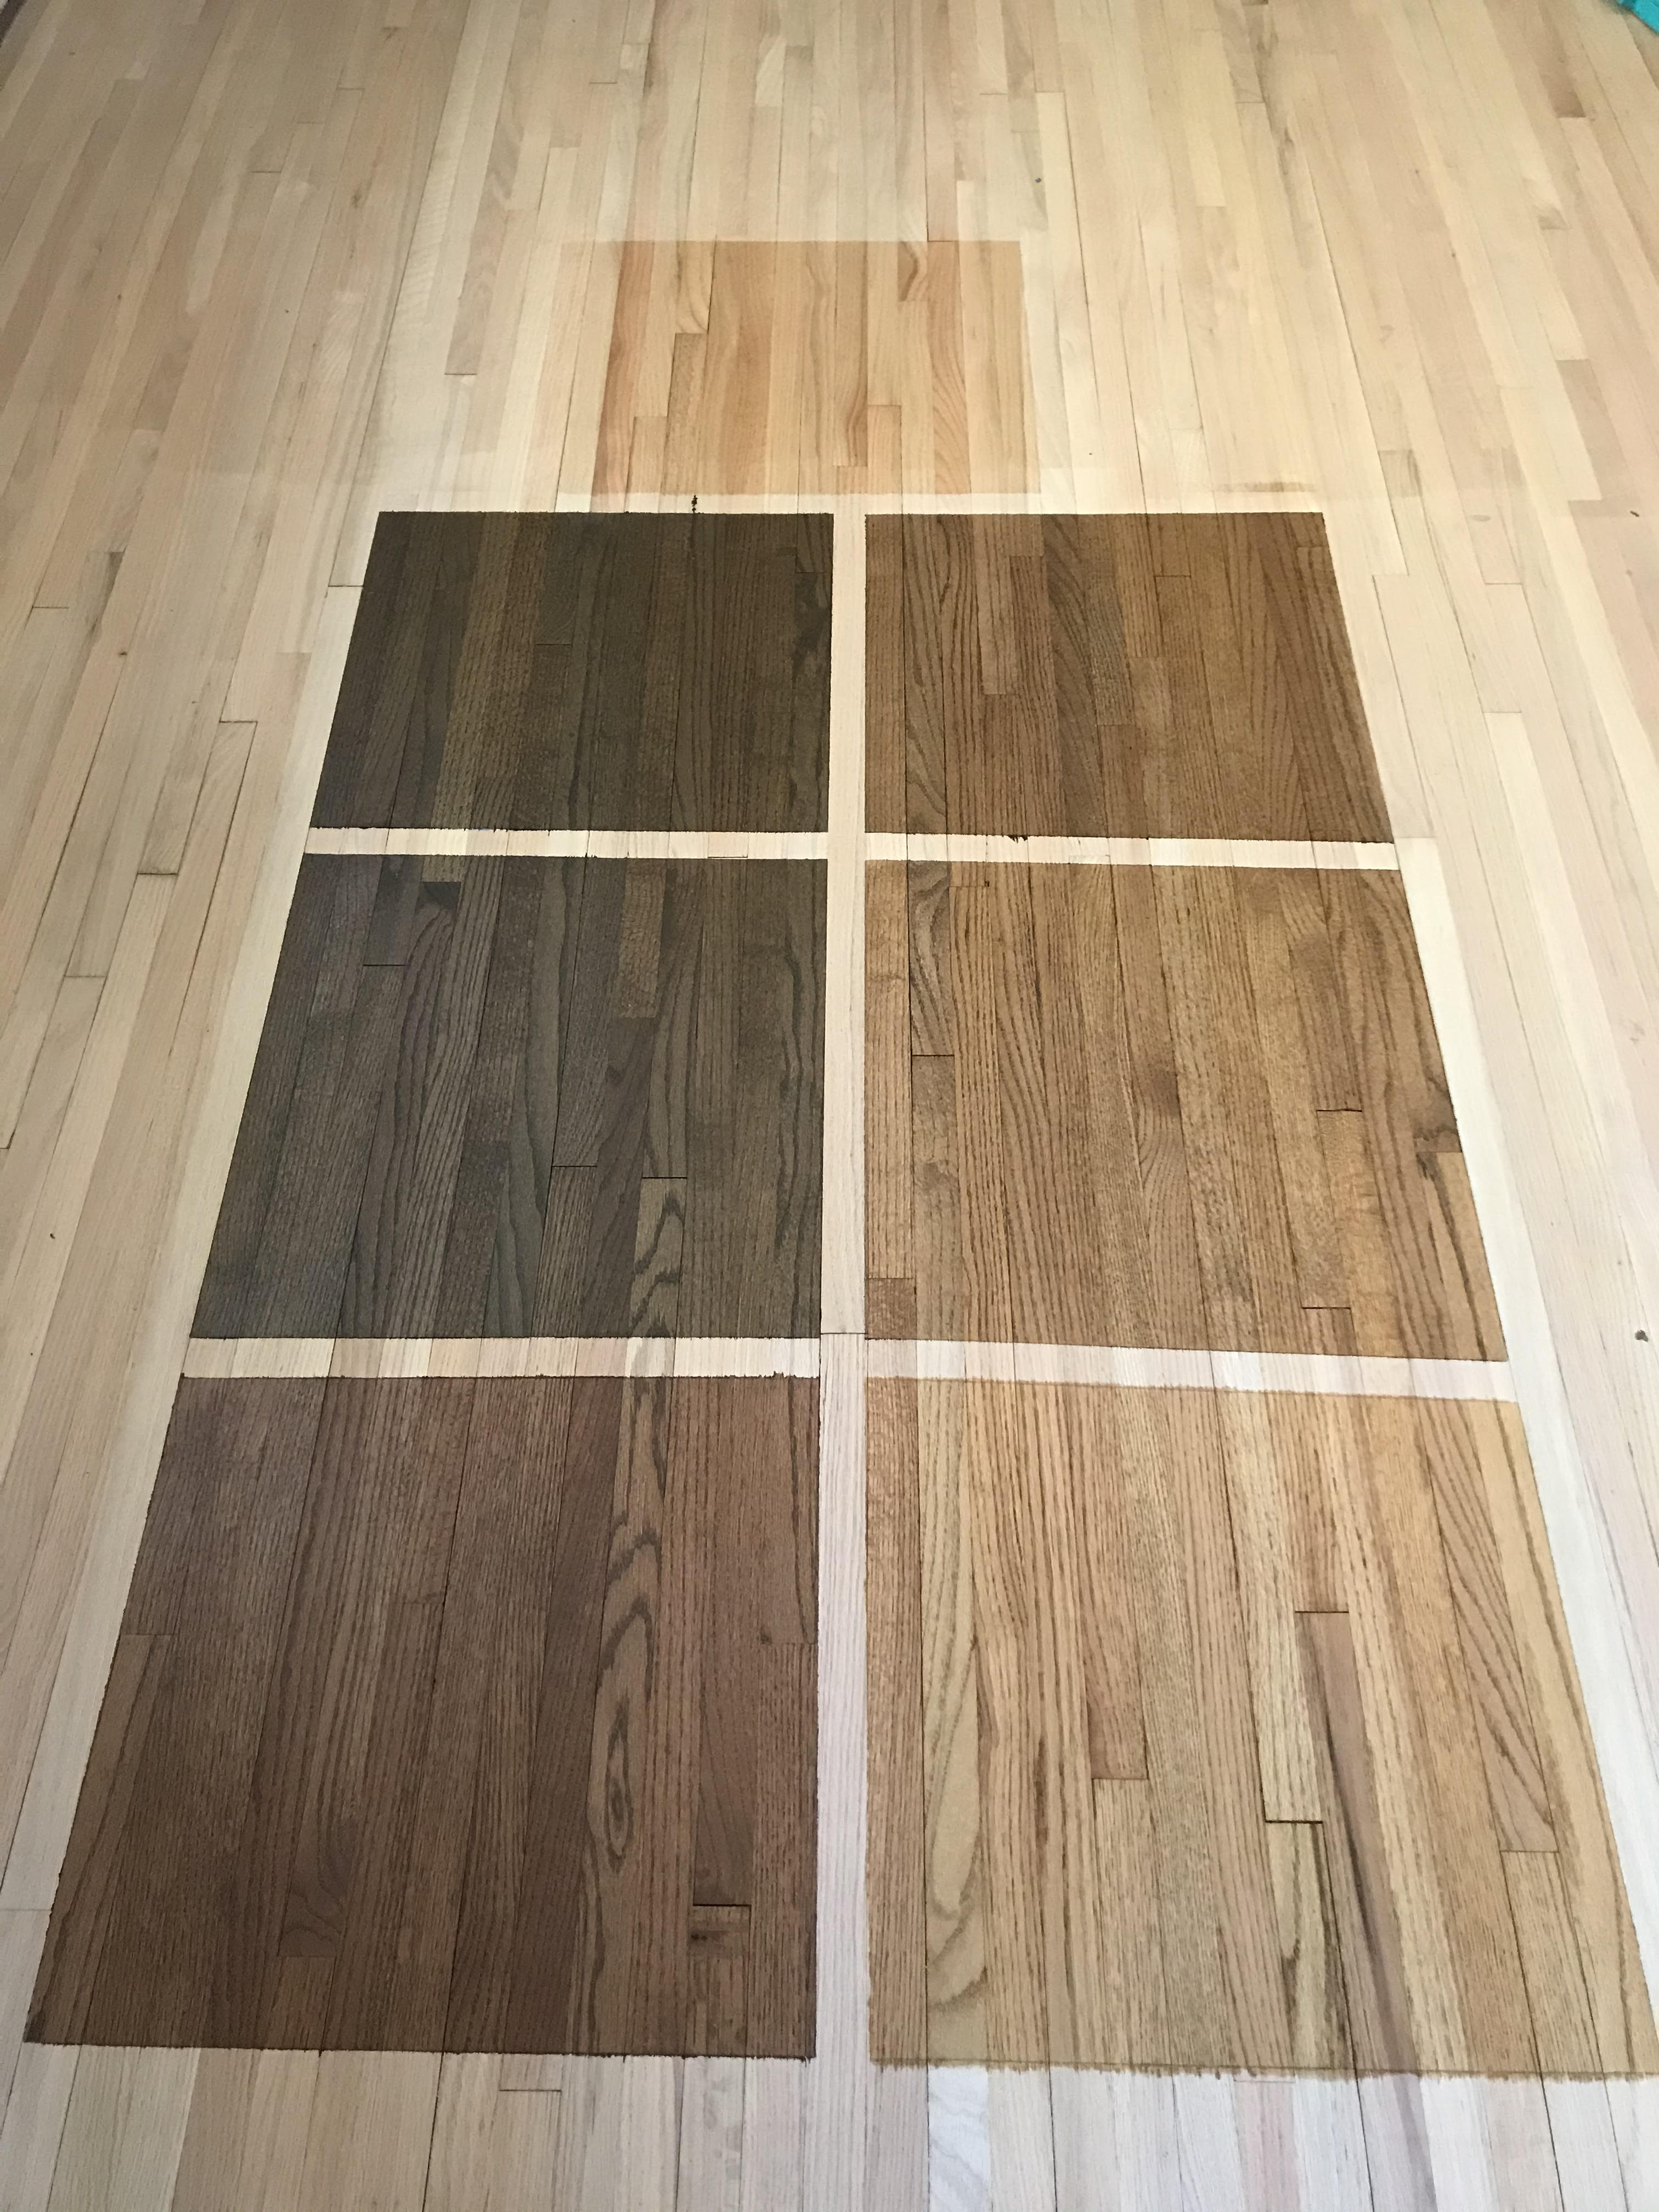 Hardwood Floor Refinishing Ub, How To Finish Hardwood Floors